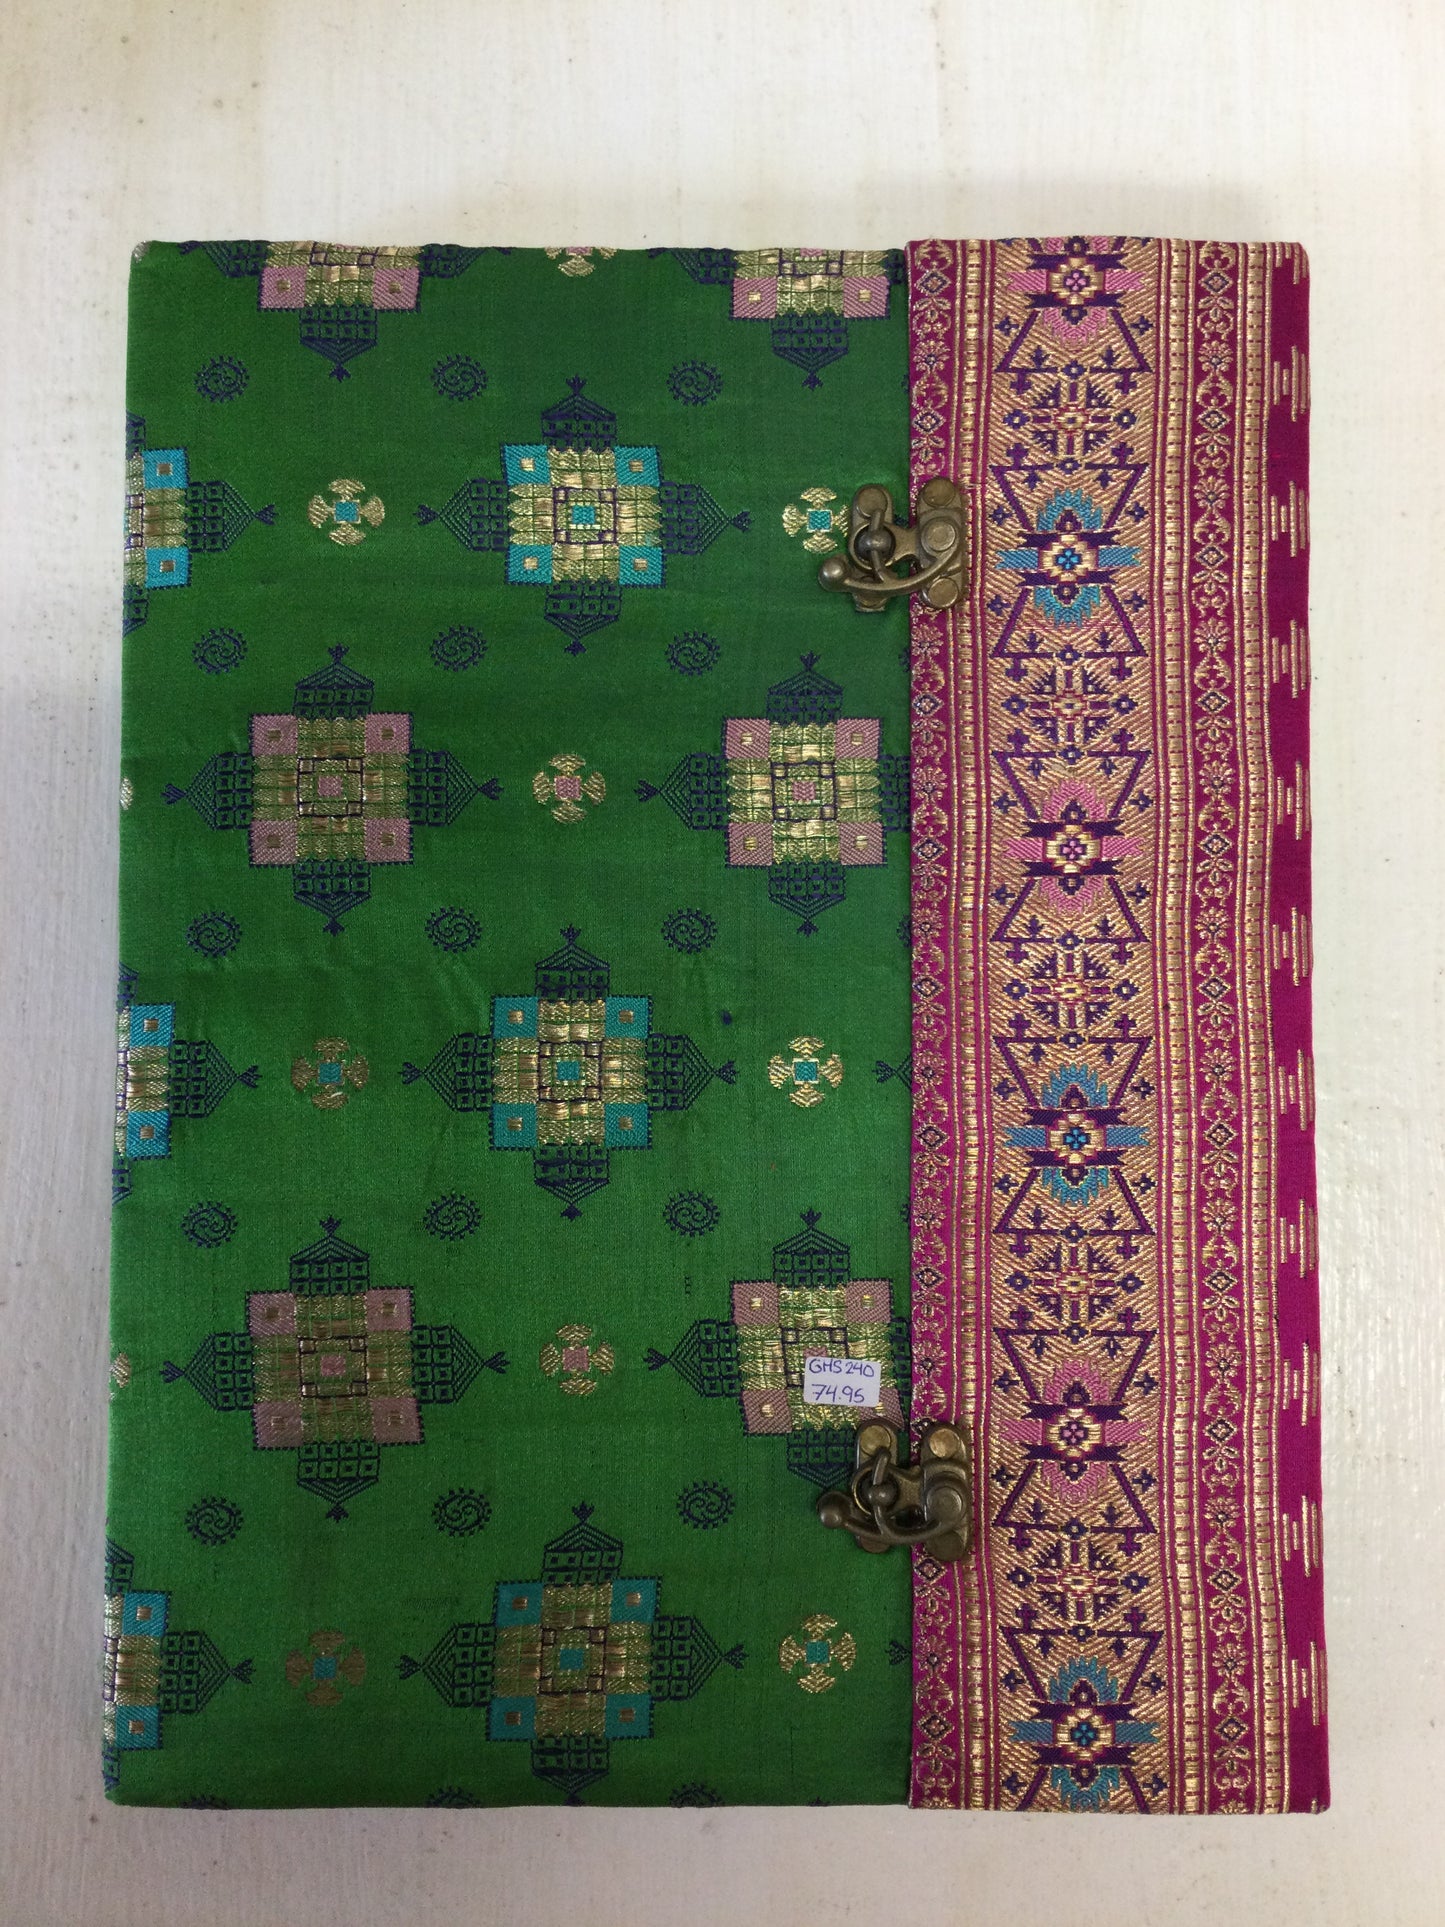 Handmade Sari Journal Large